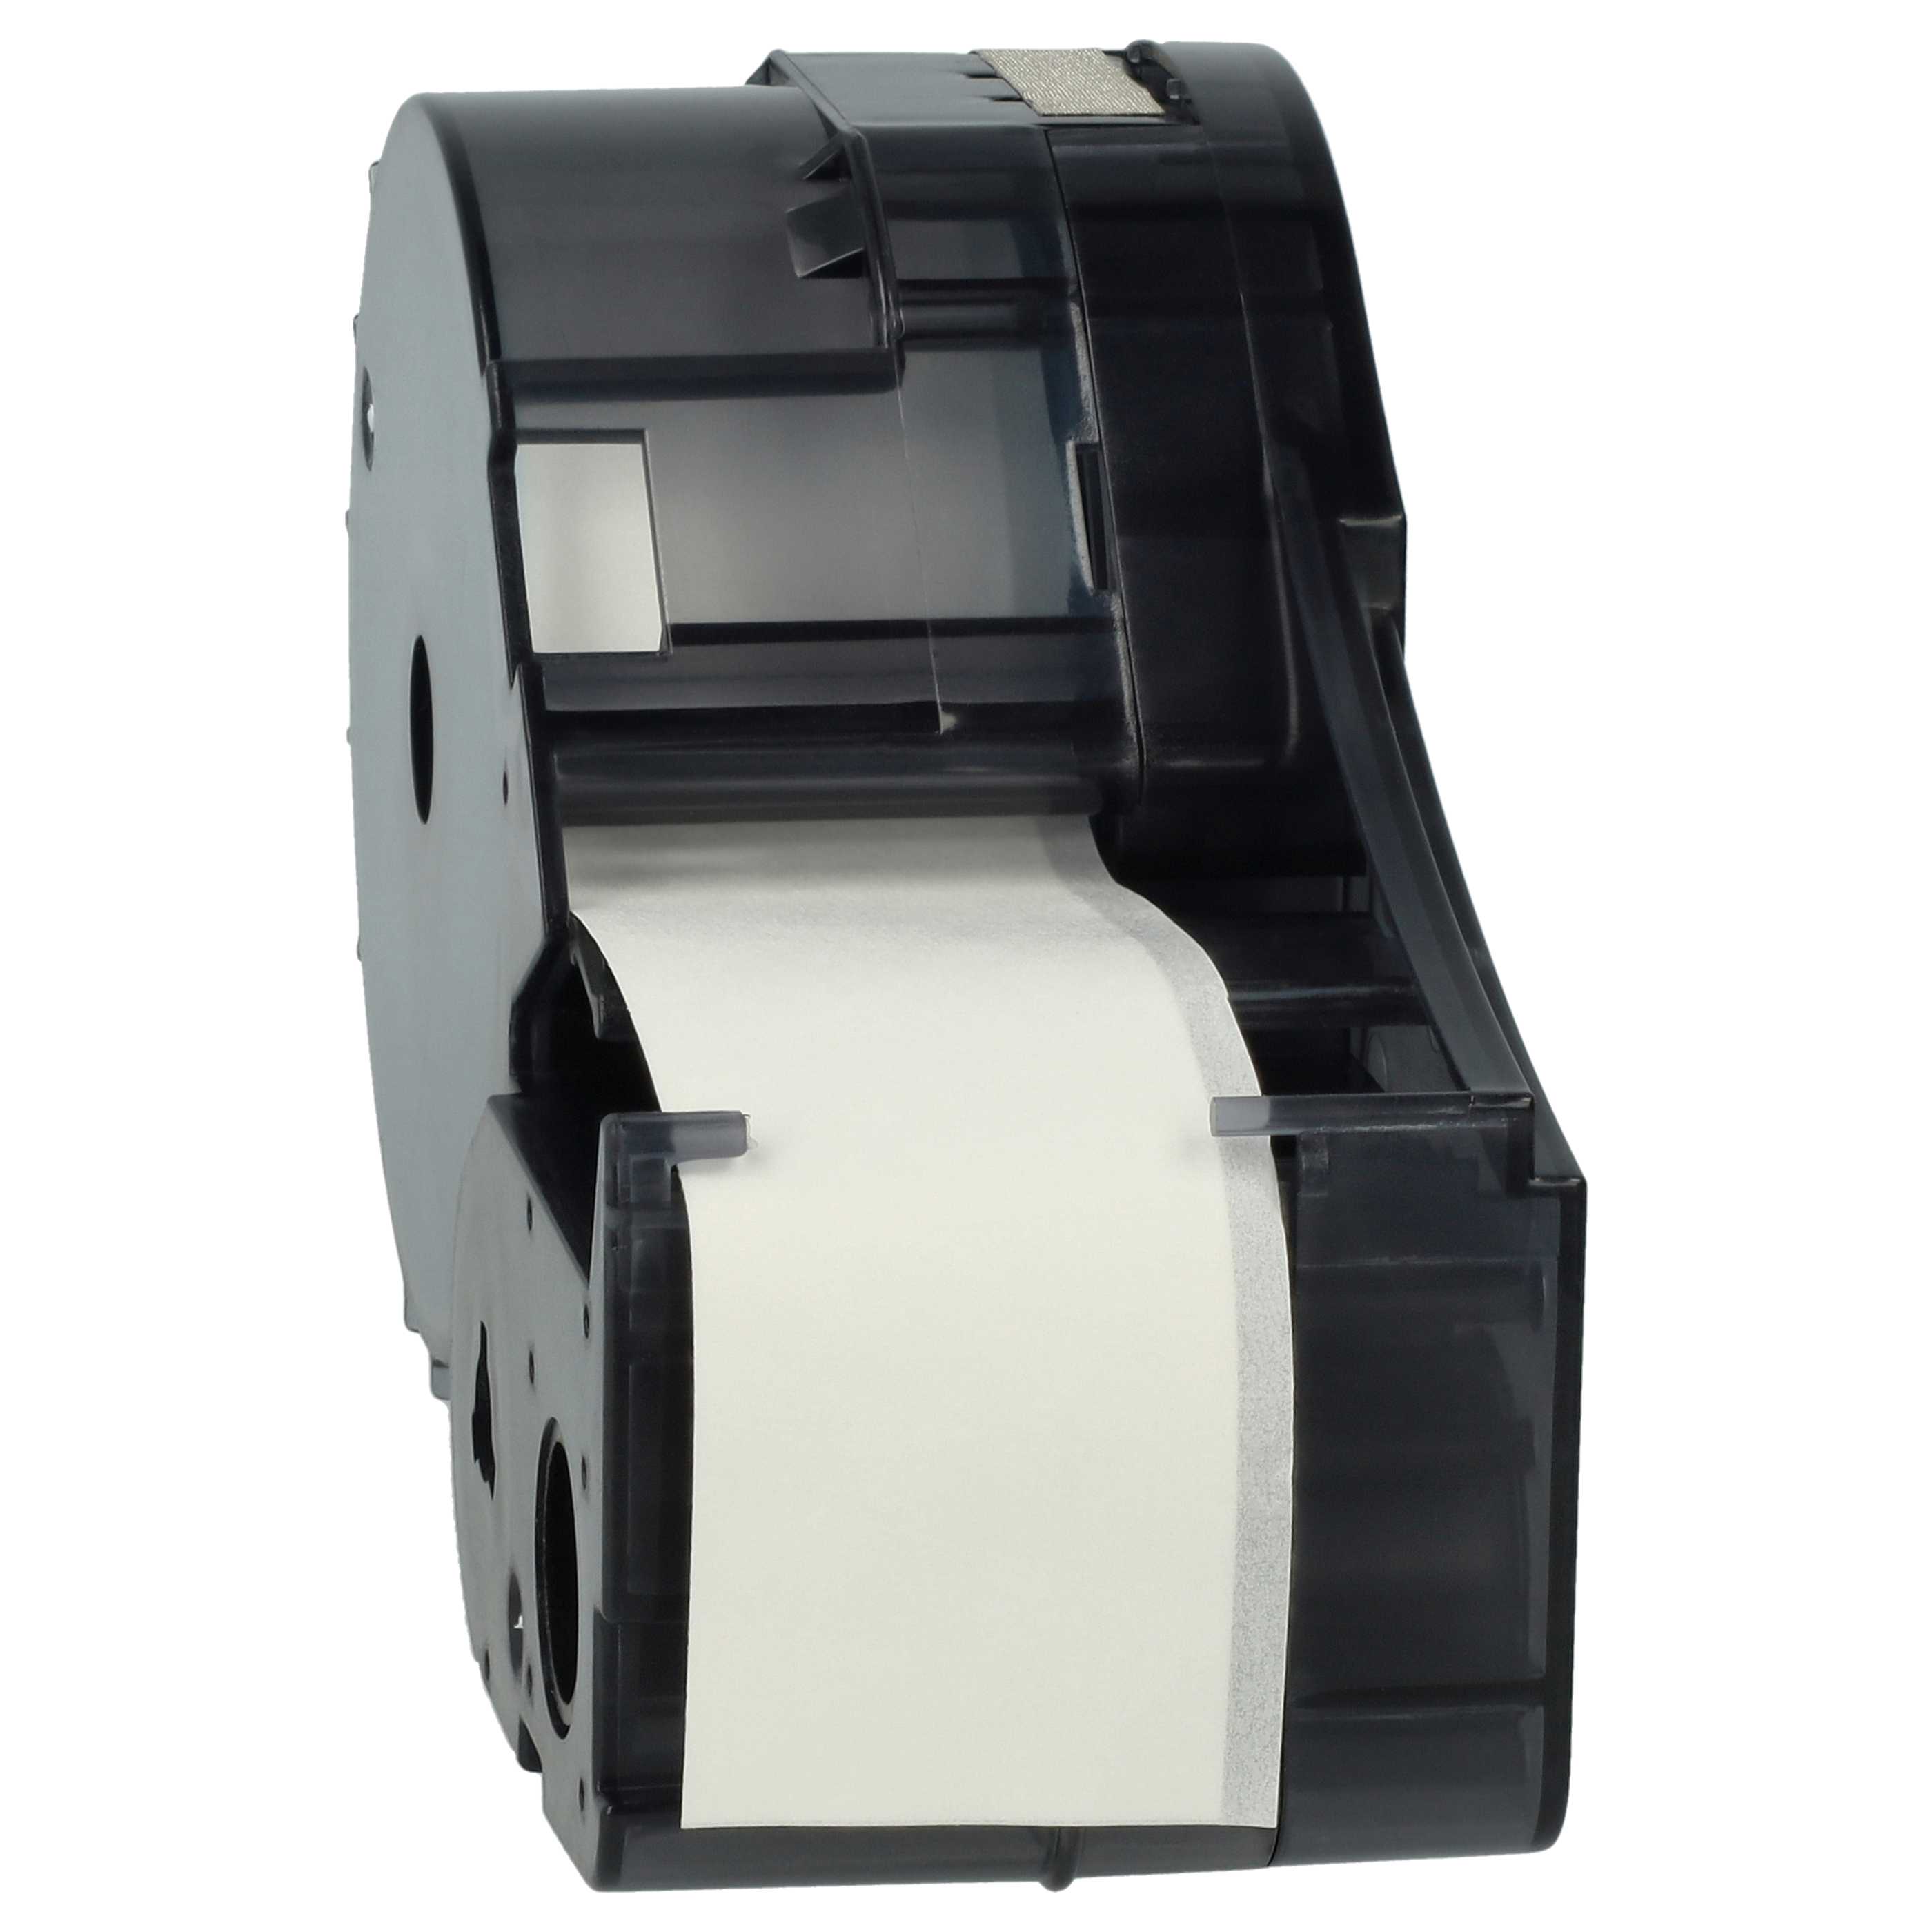 5x Casete cinta escritura reemplaza Brady M21-750-595-WT Negro su Blanco